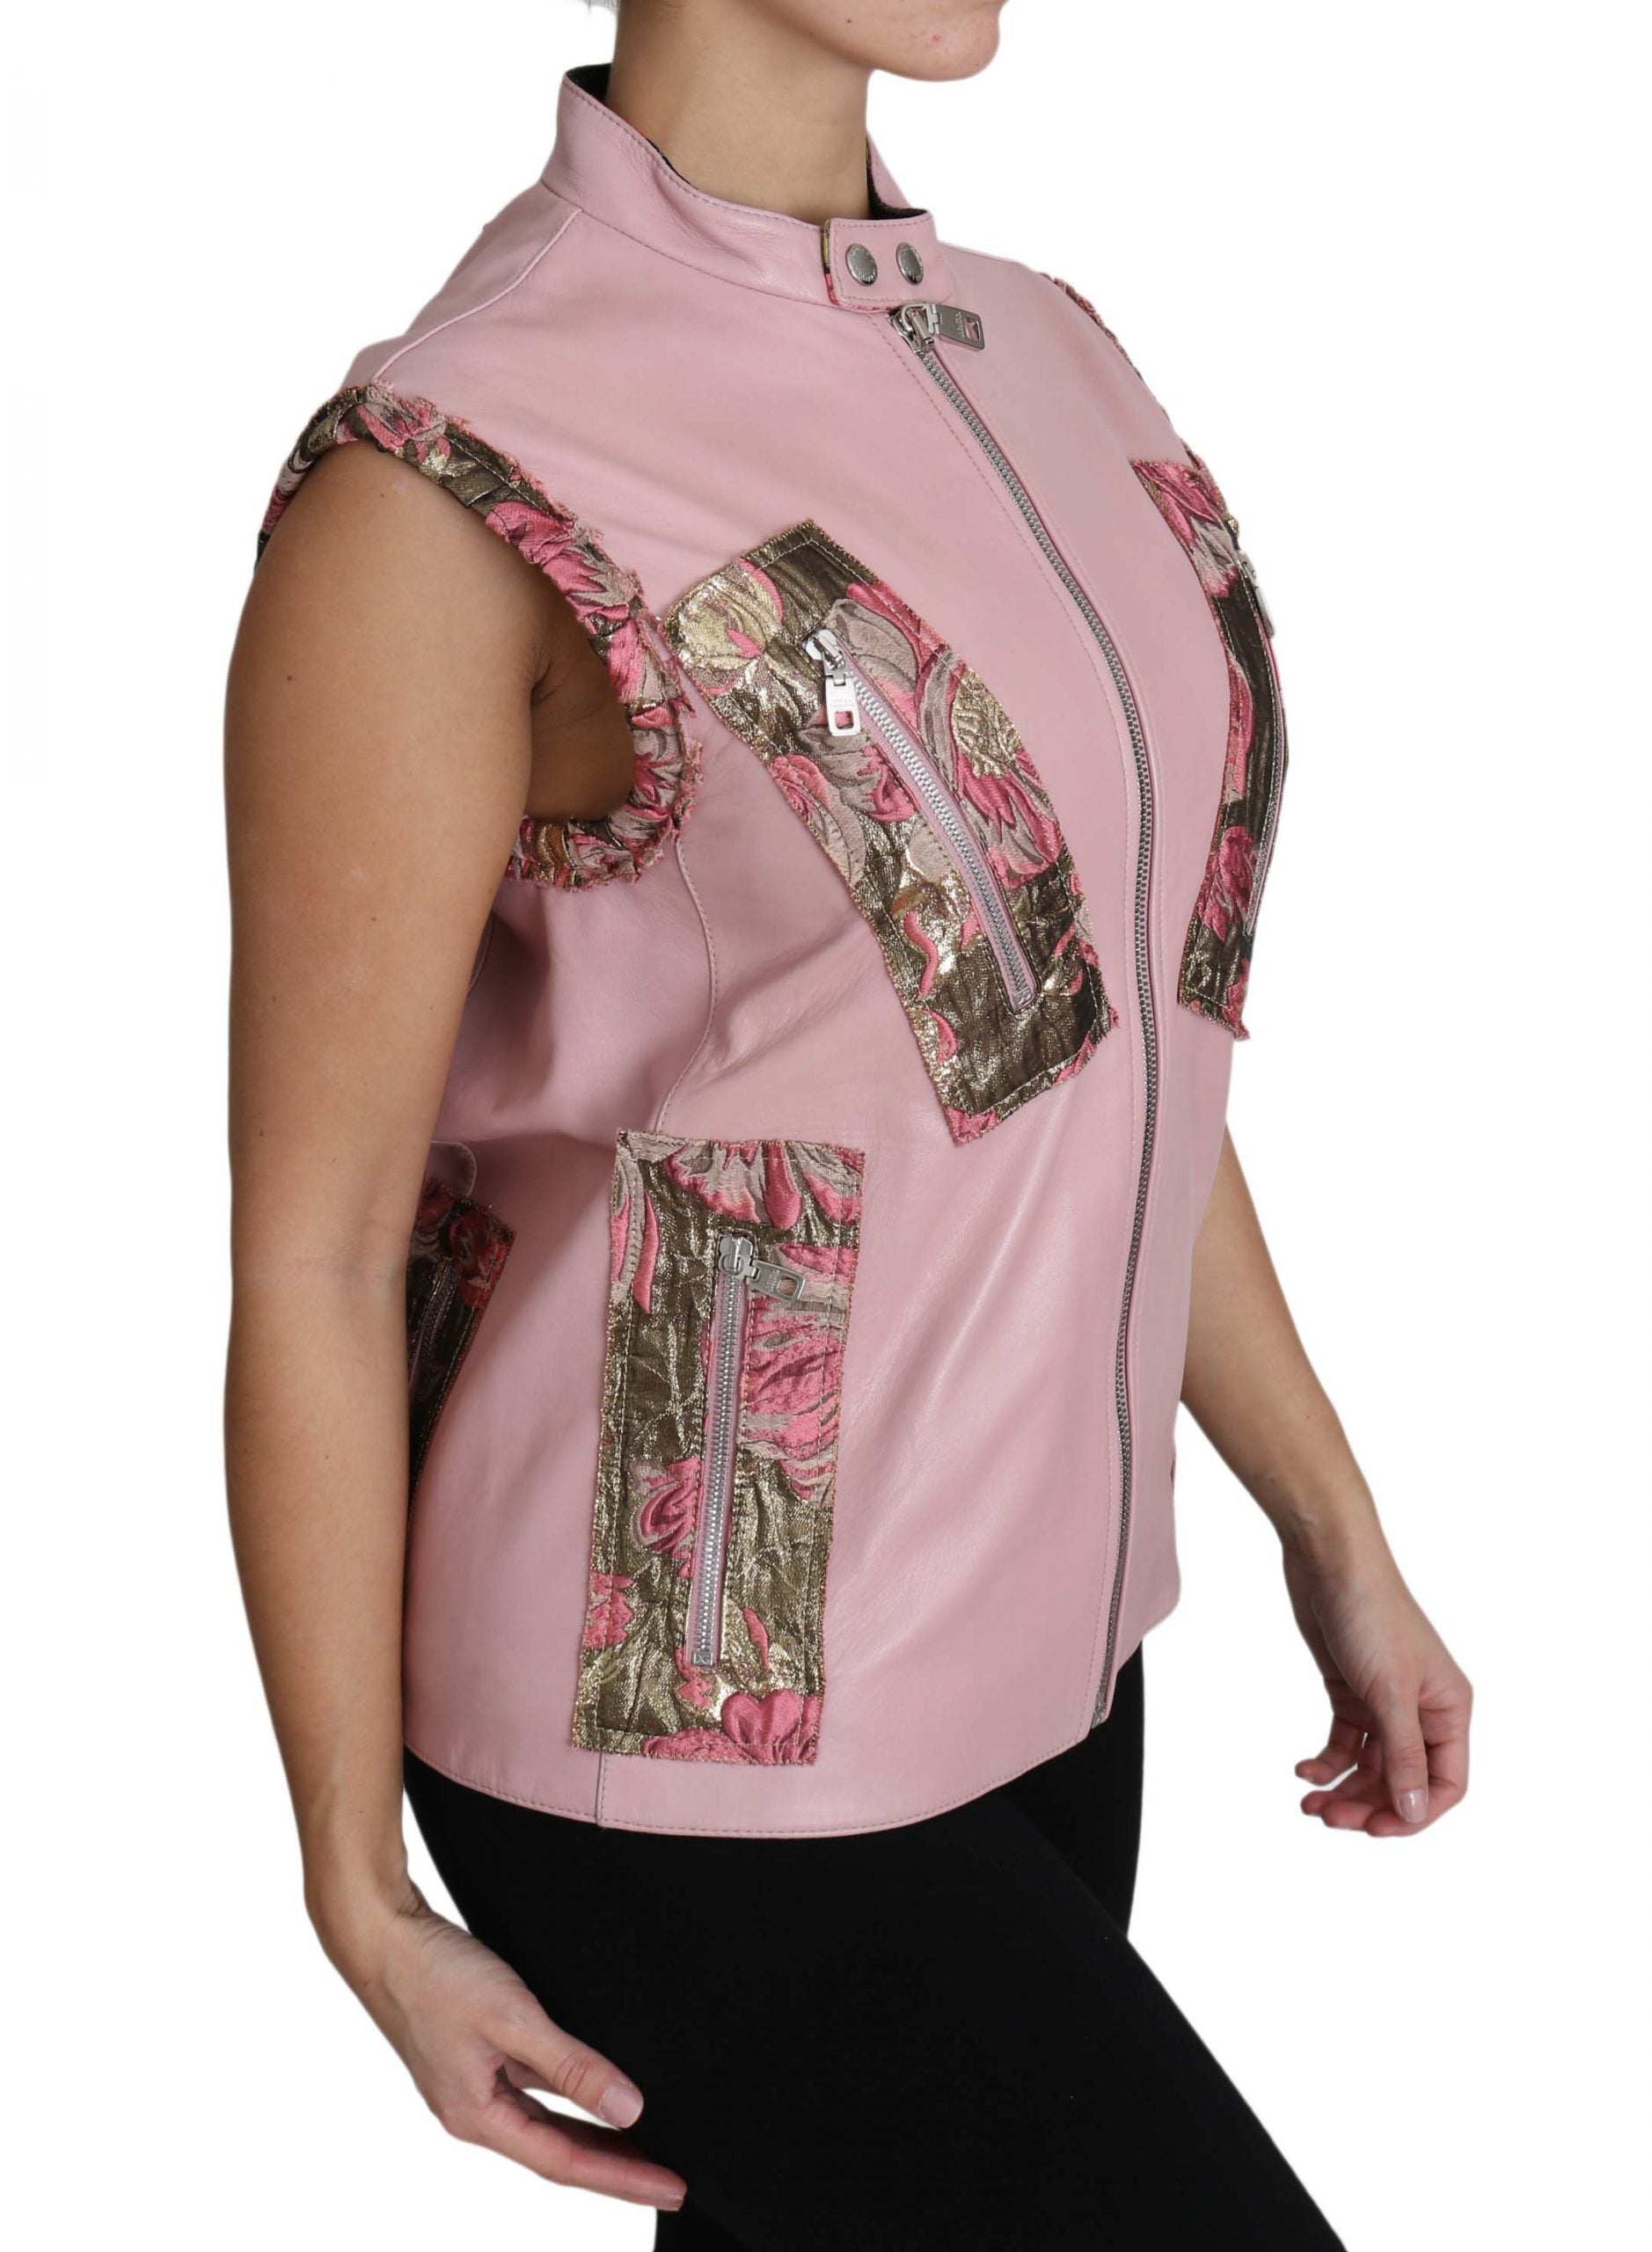 Stunning Pink Sleeveless Leather Vest